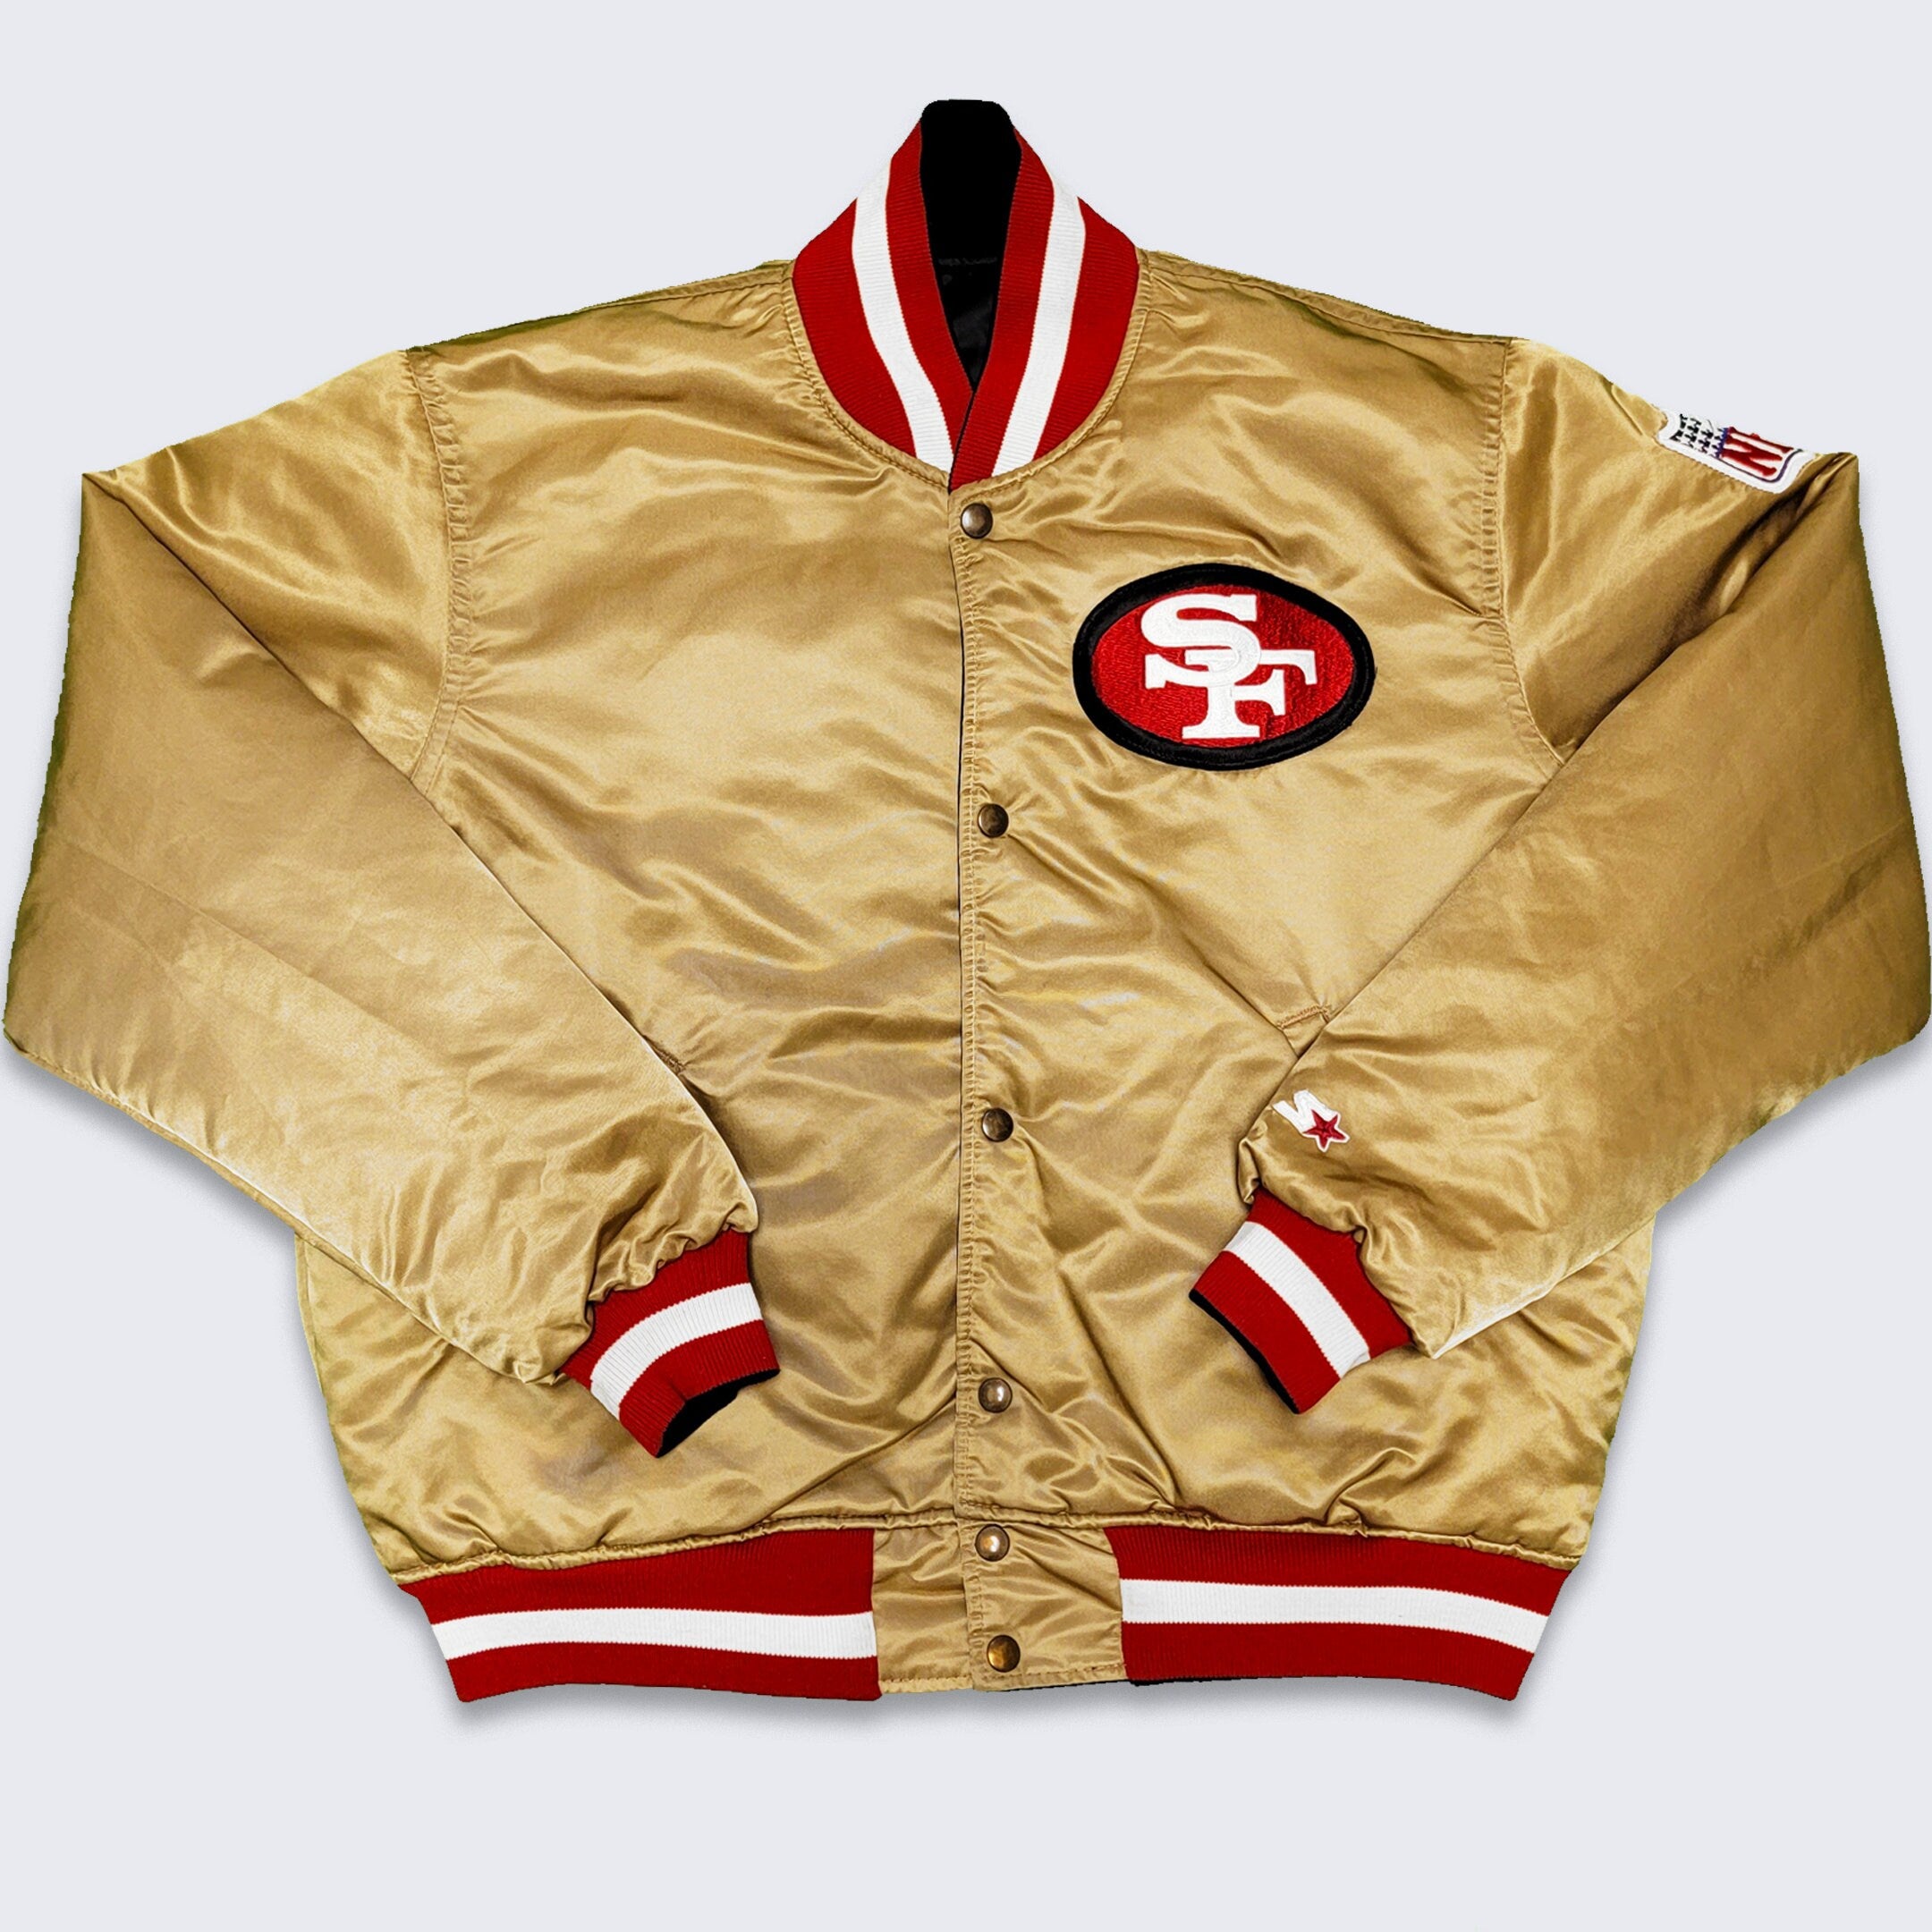 1980s 49ers jacket